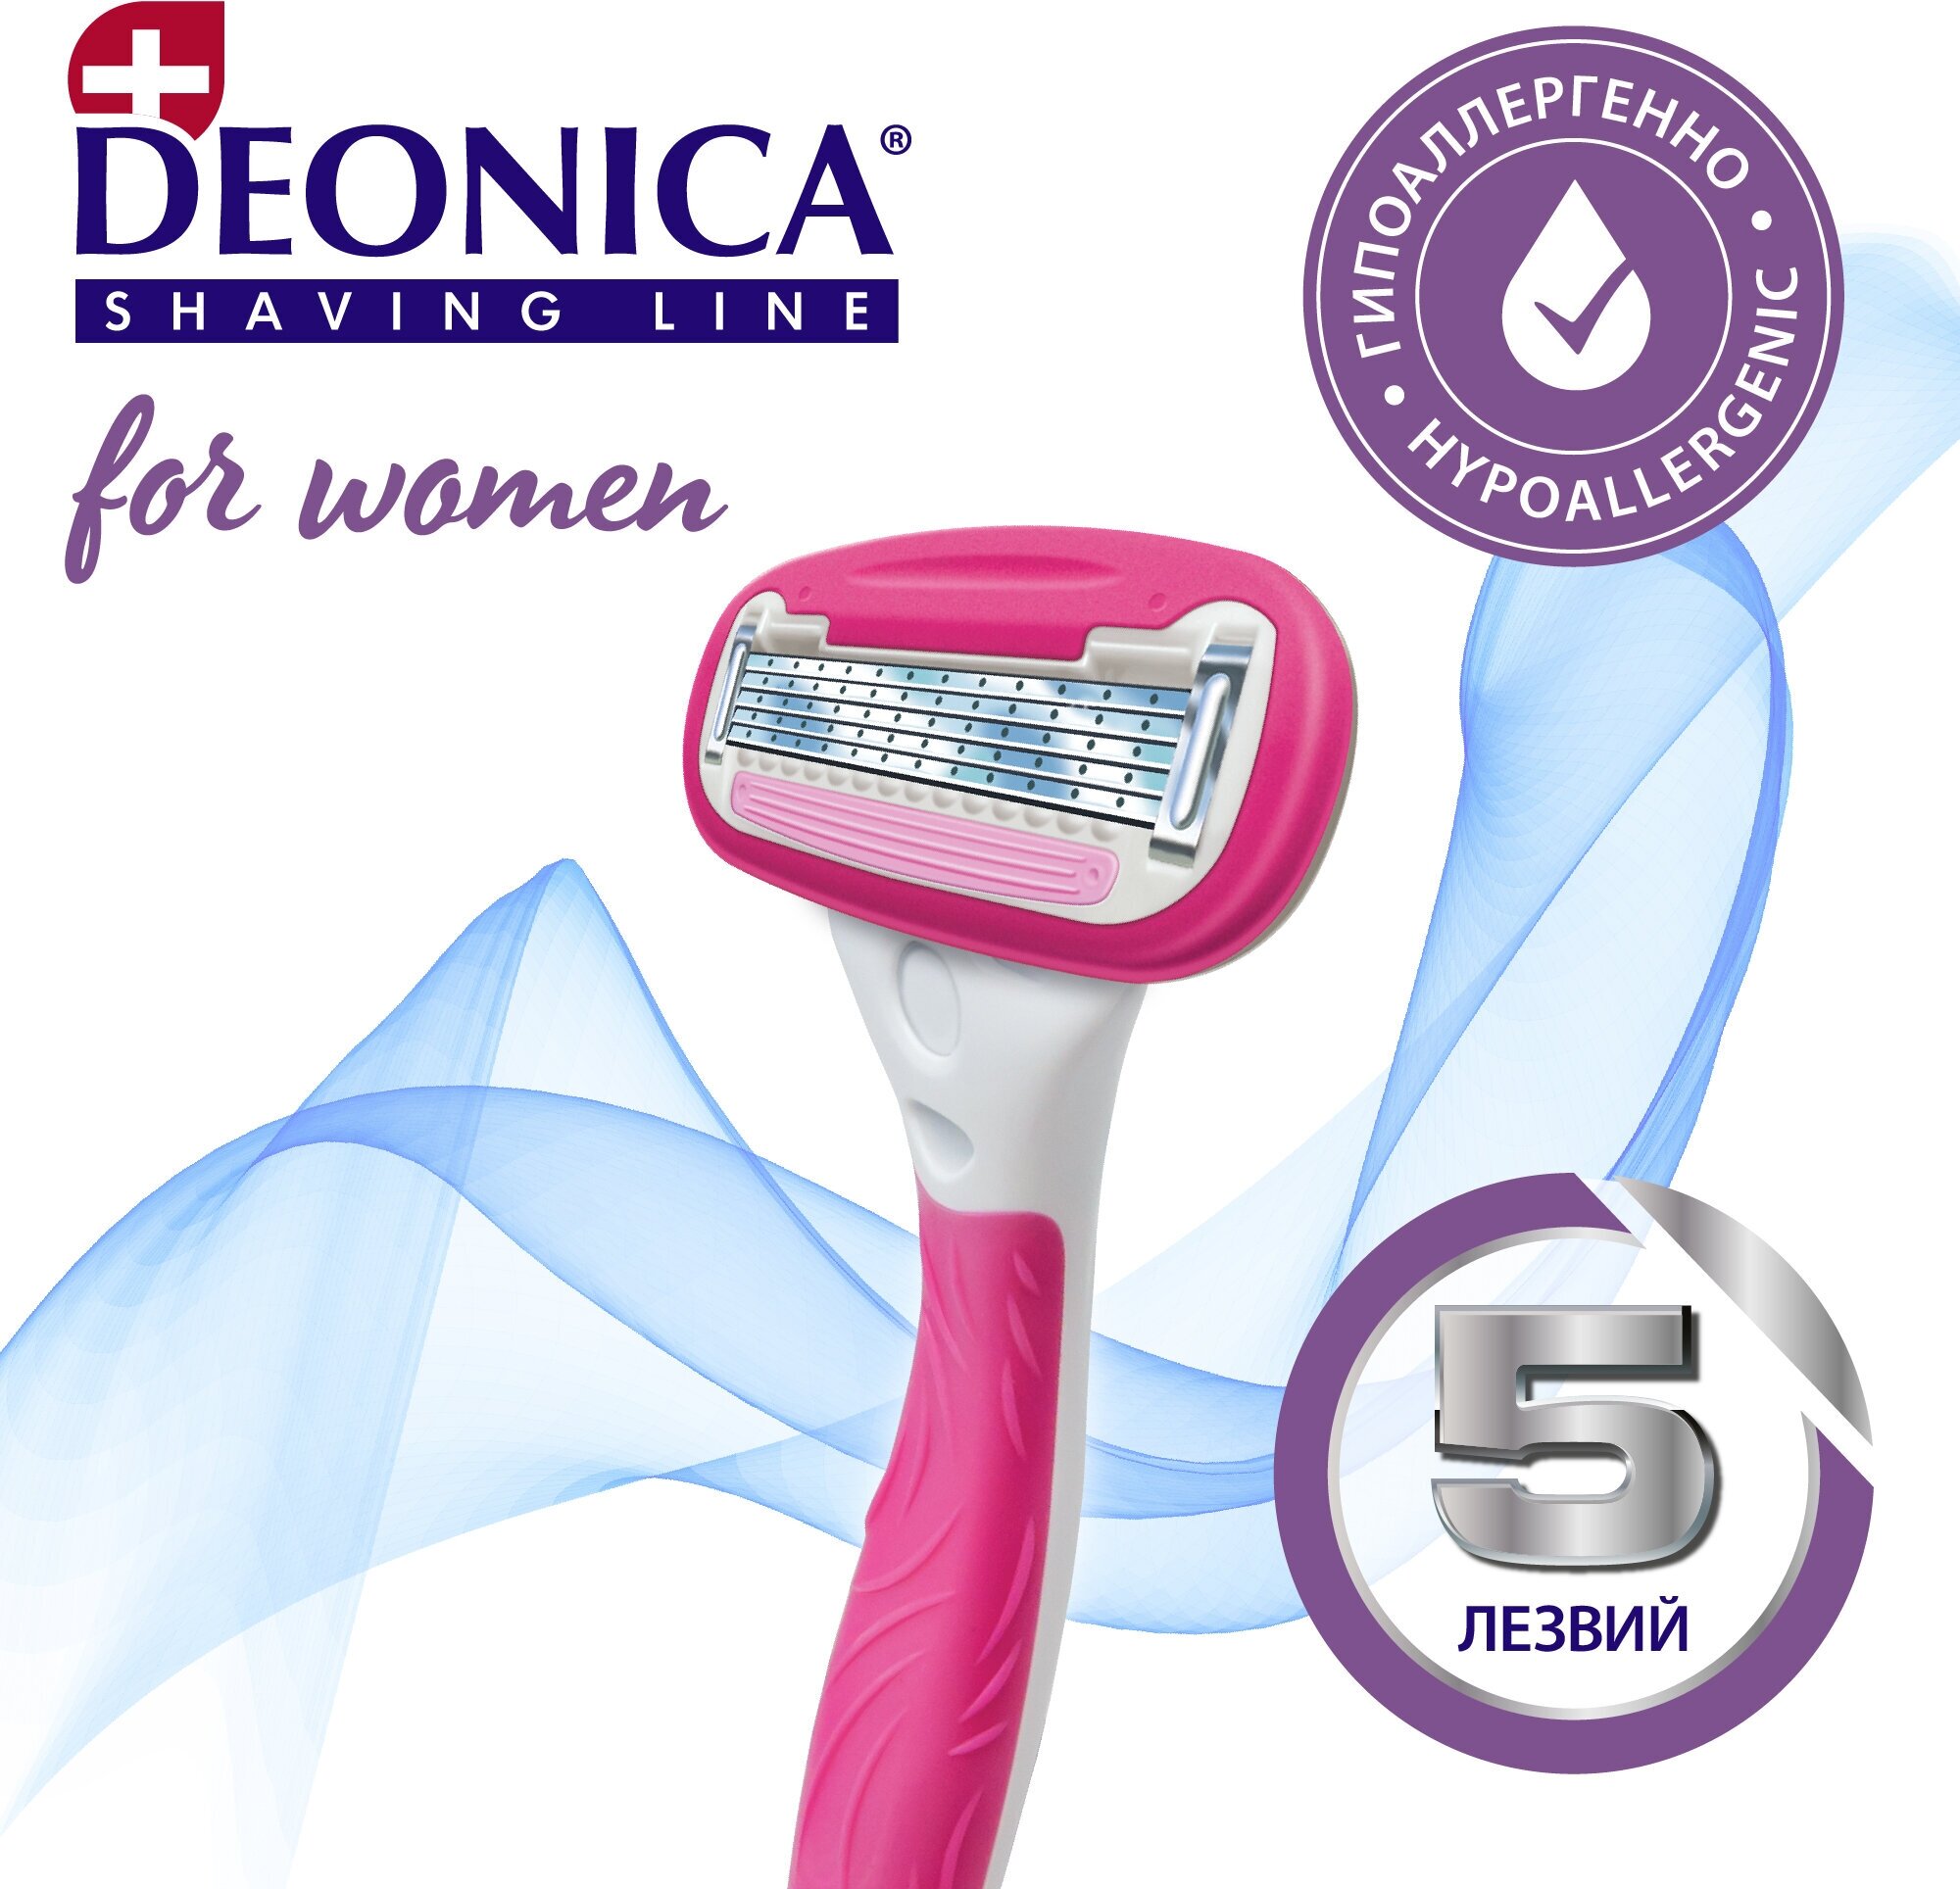 Deonica 5 FOR WOMEN  ,  1    